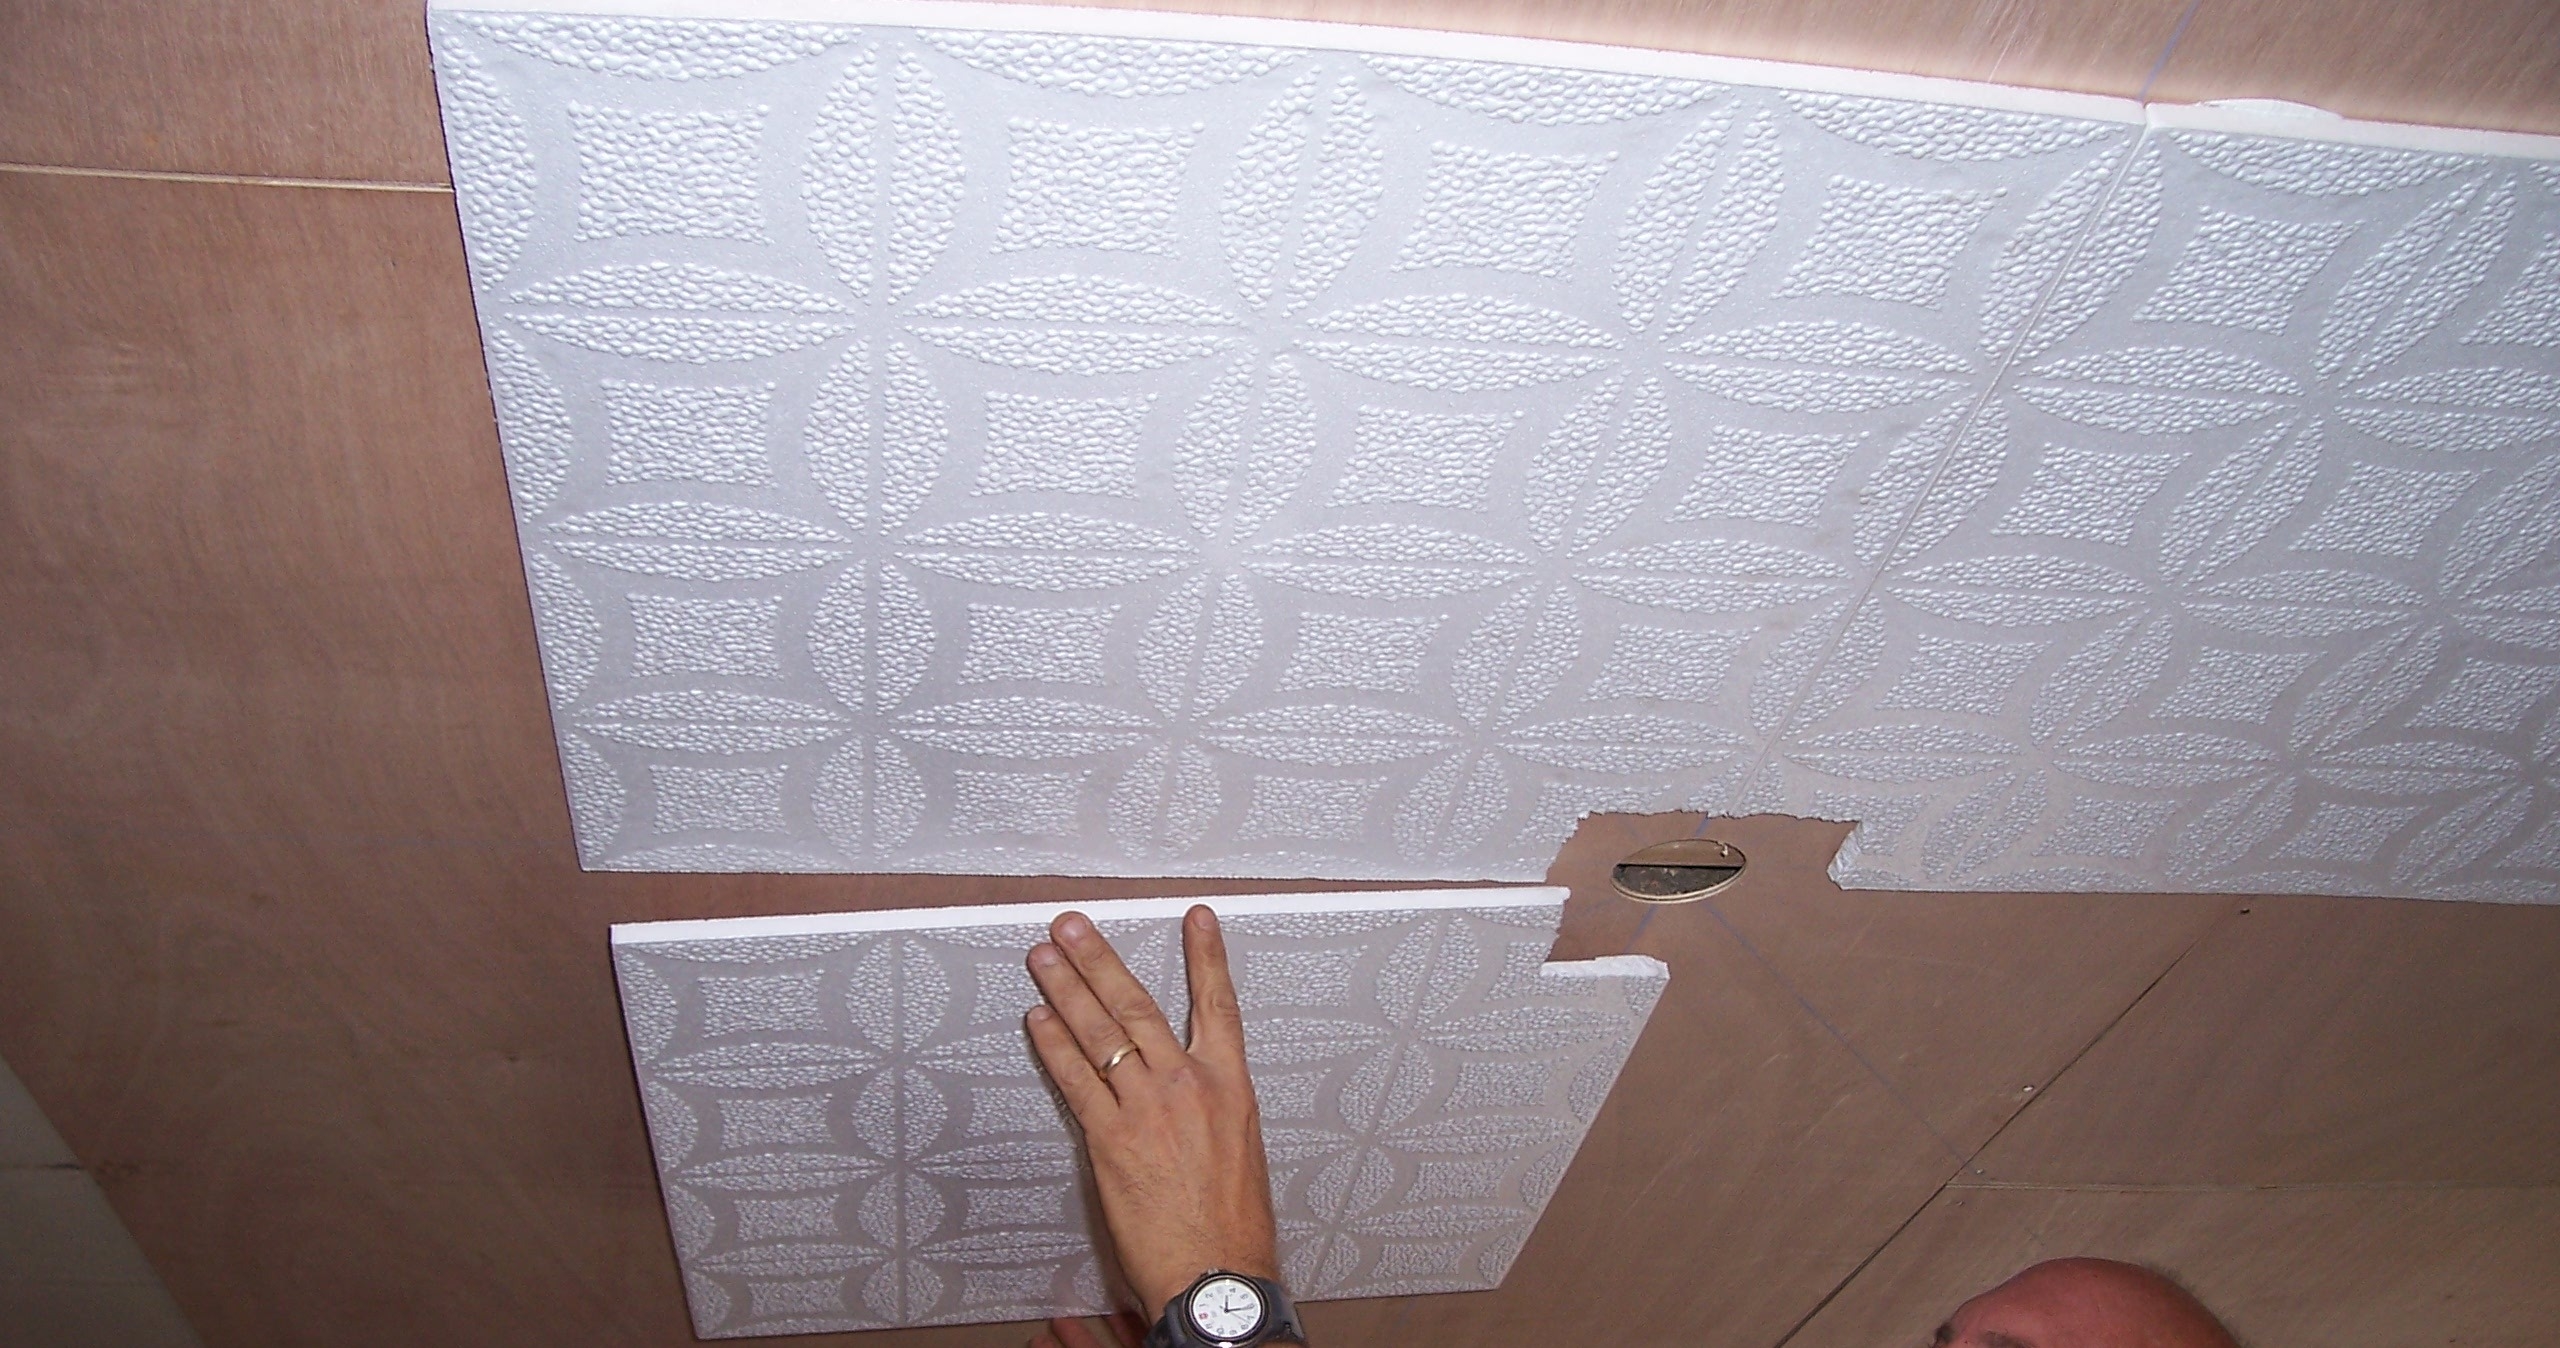 Acoustic Ceiling Tiles Glue Upceiling tile glue choice image tile flooring design ideas